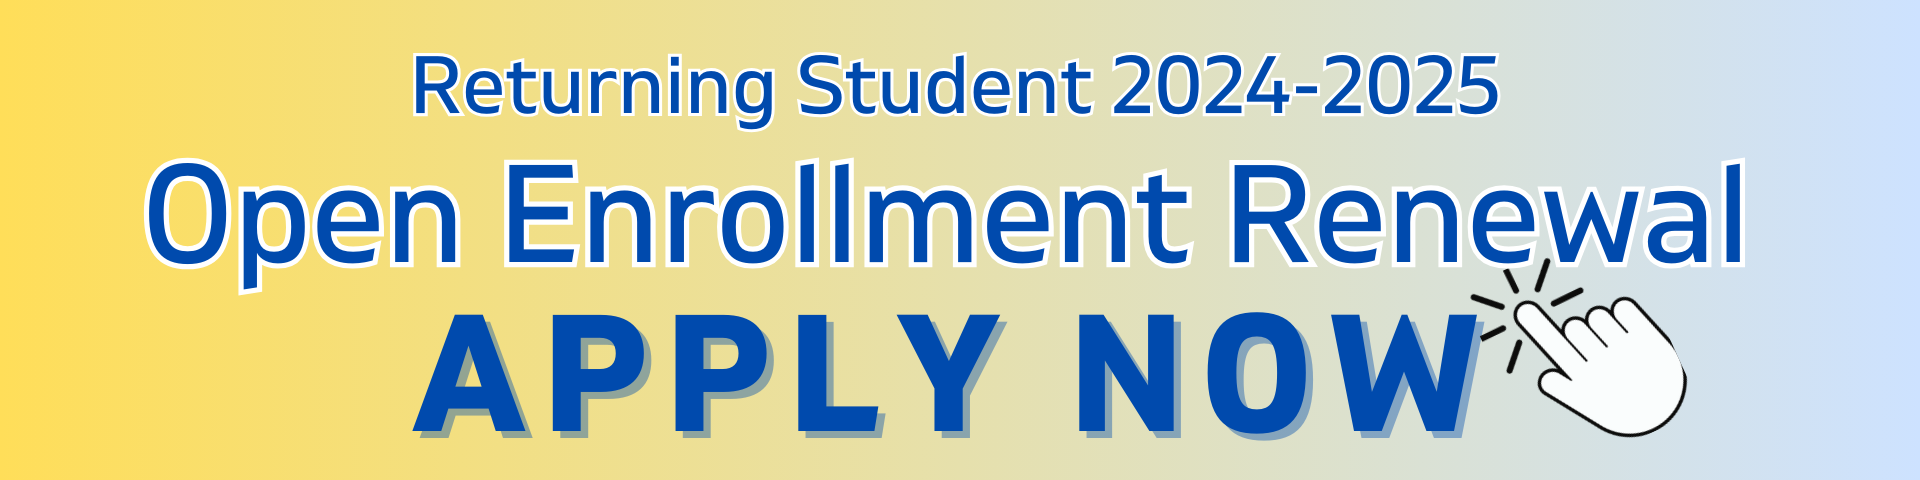 Open Enrollment Renewal Apply Now Button 